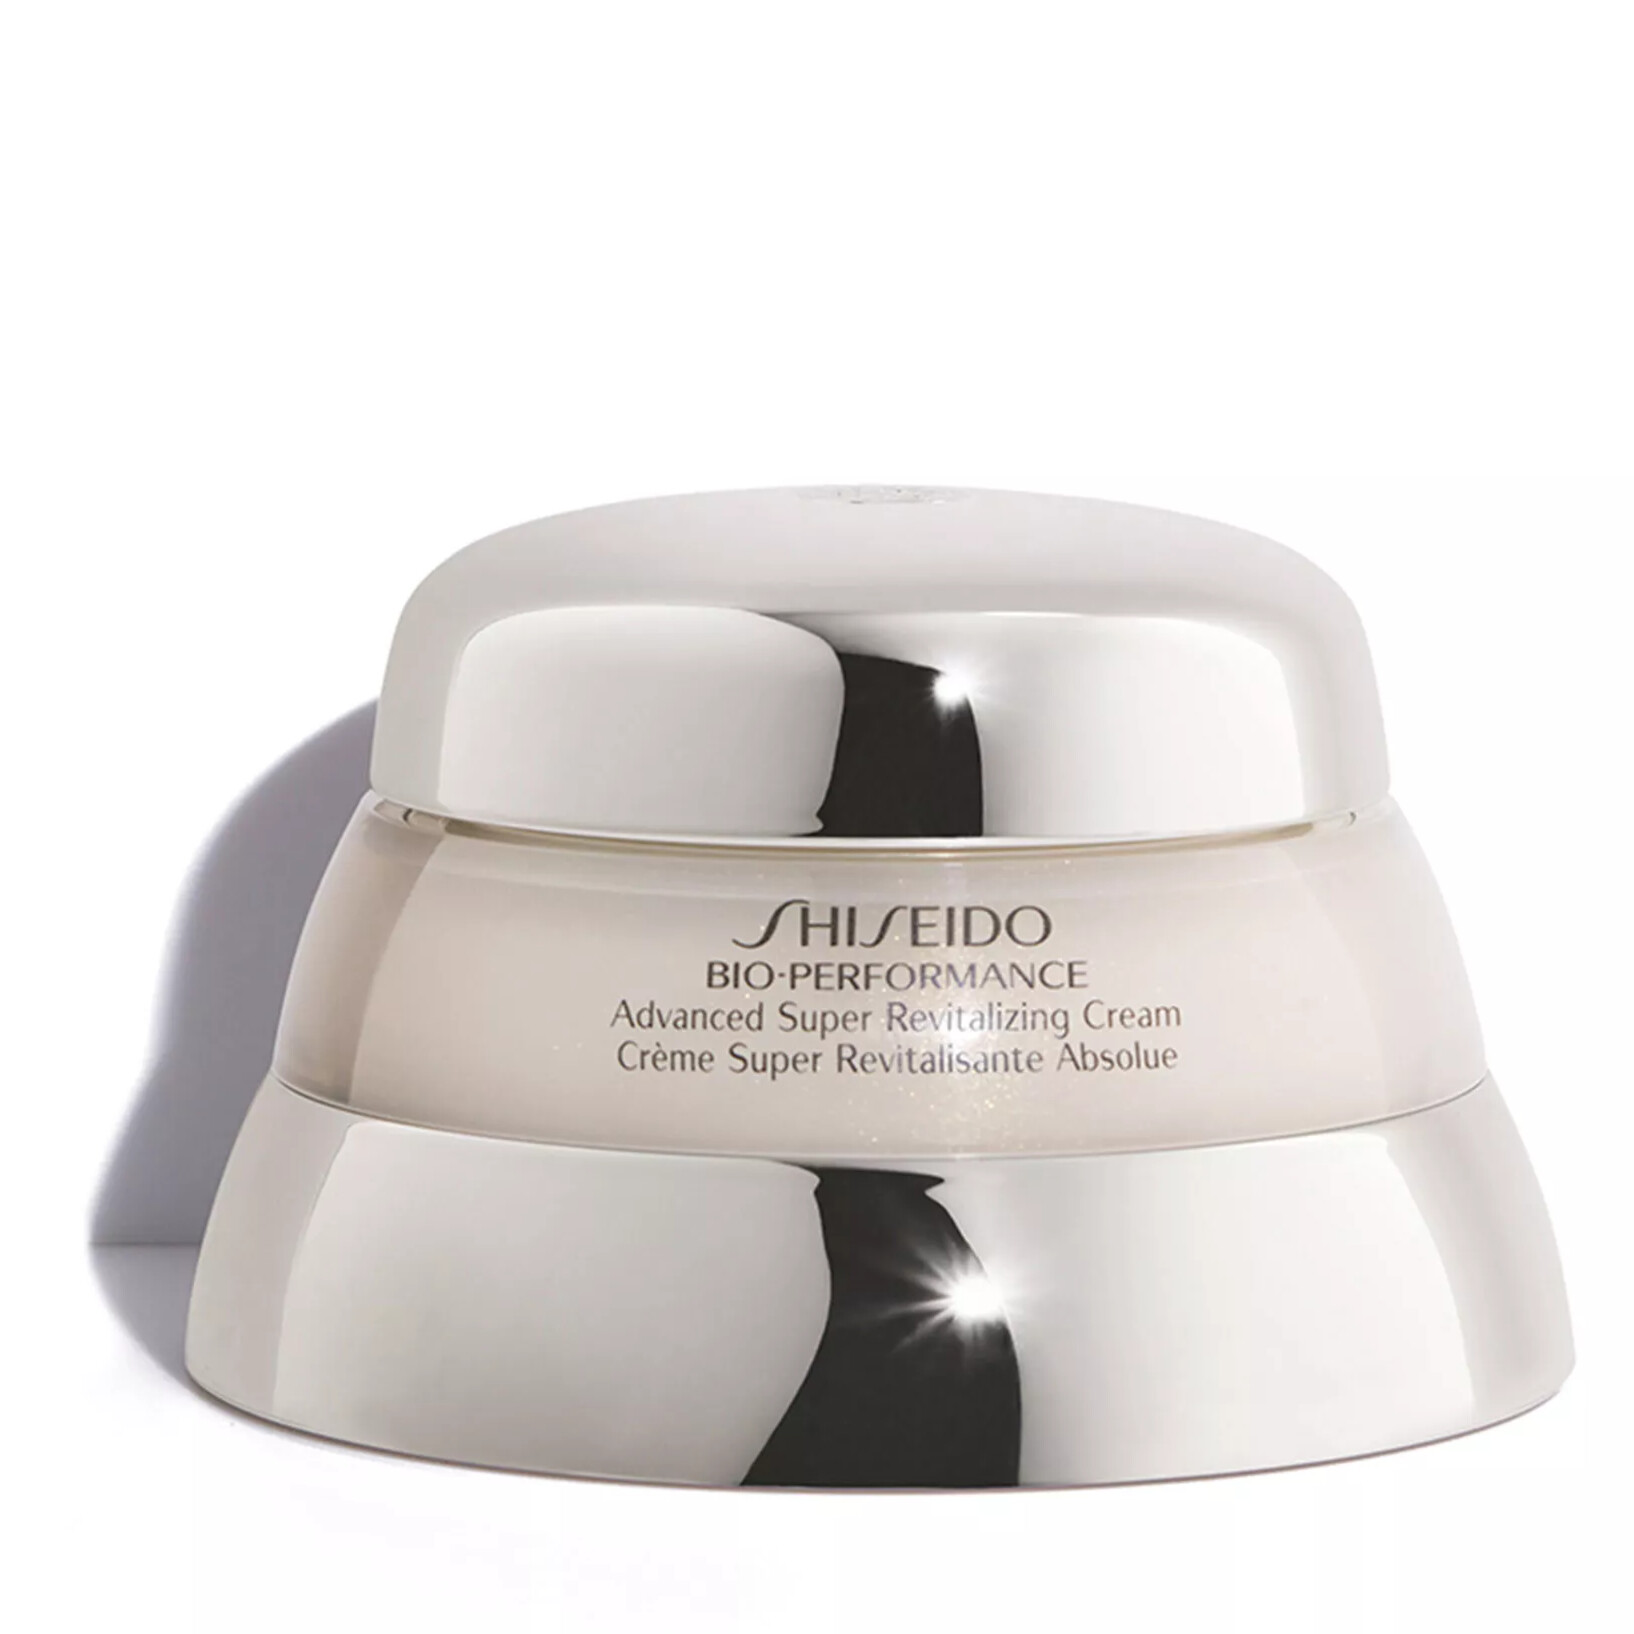 Tagescreme Shiseido Bio-Performance Advanced Super Revitalizing Cream 75ml kaufen